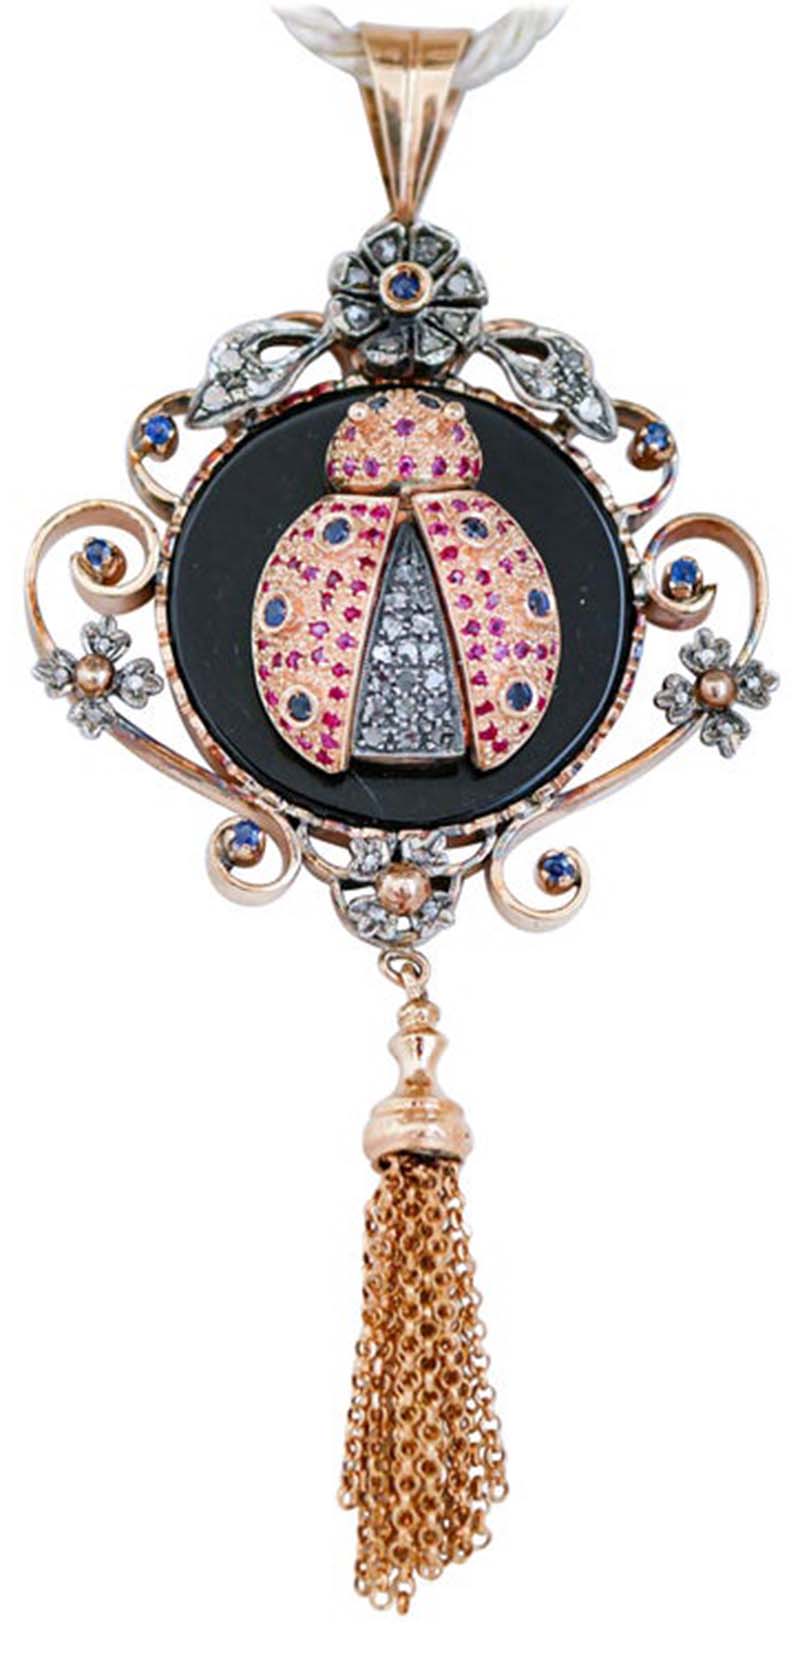 Onyx, Rubies, Sapphires, Diamonds, 14 Karat  Gold and Silver Pendant Necklace.